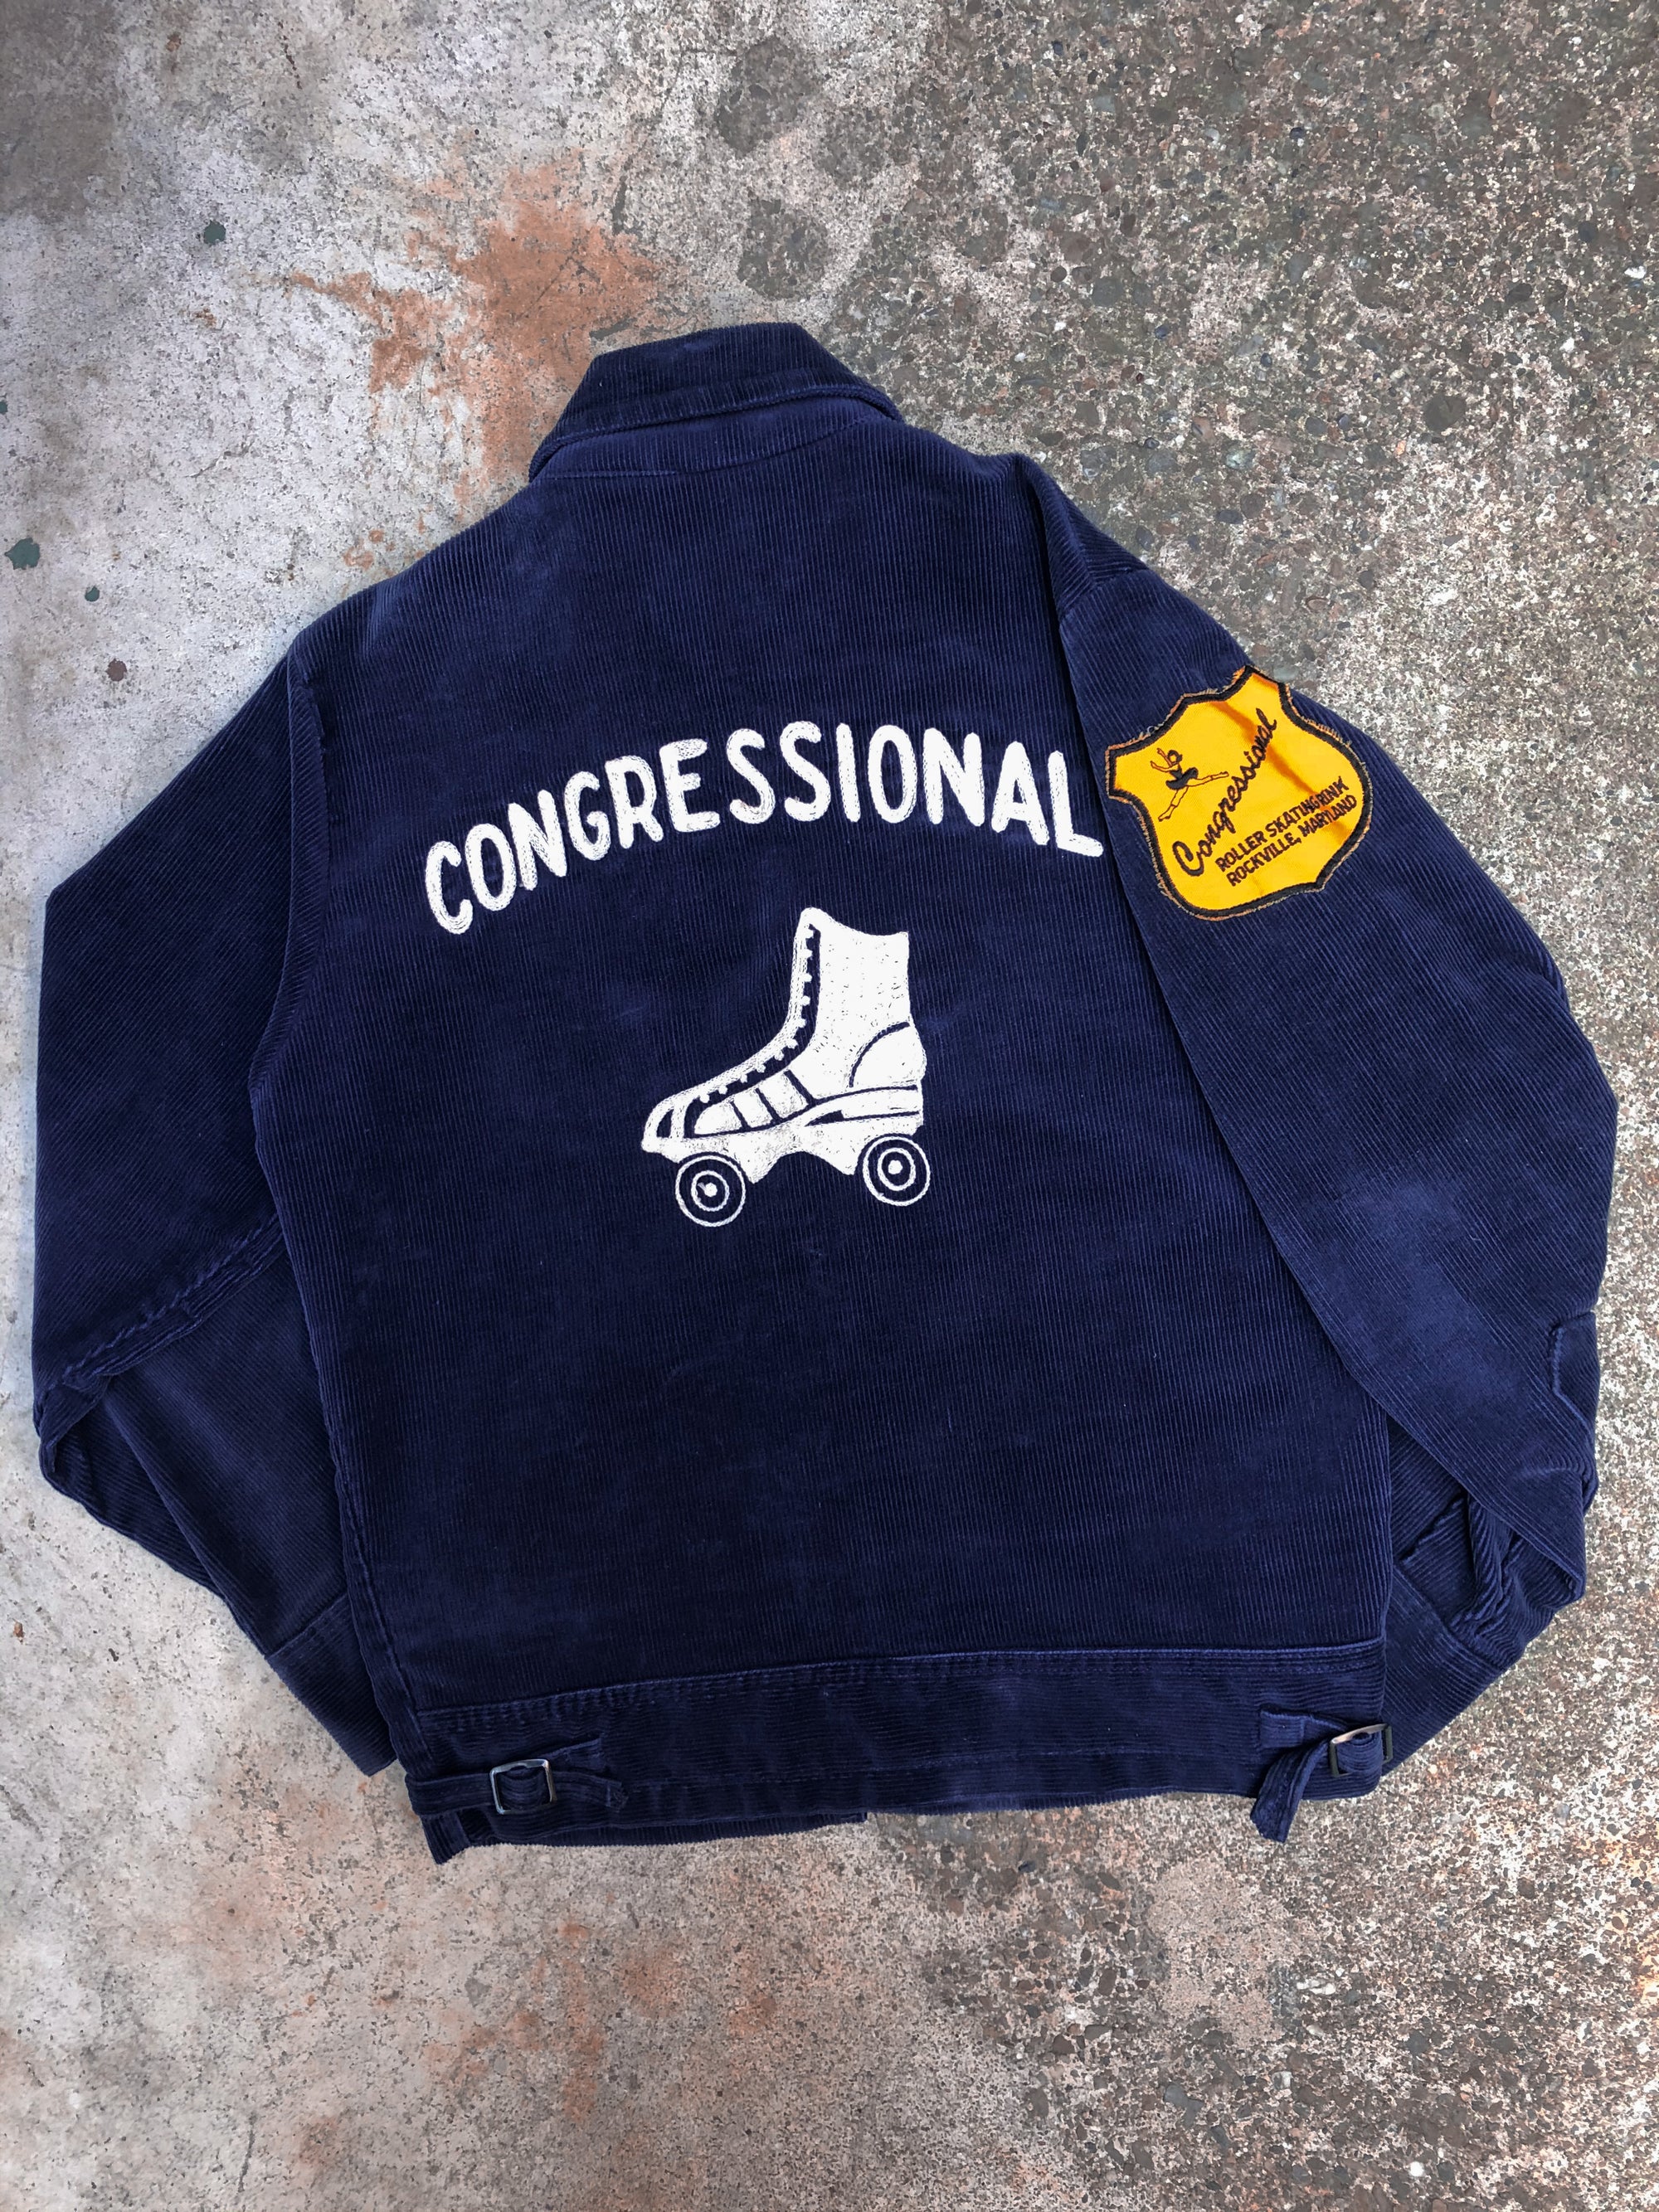 1960s Navy Corduroy Chain Stitch “Congressional” Talon Zip Jacket